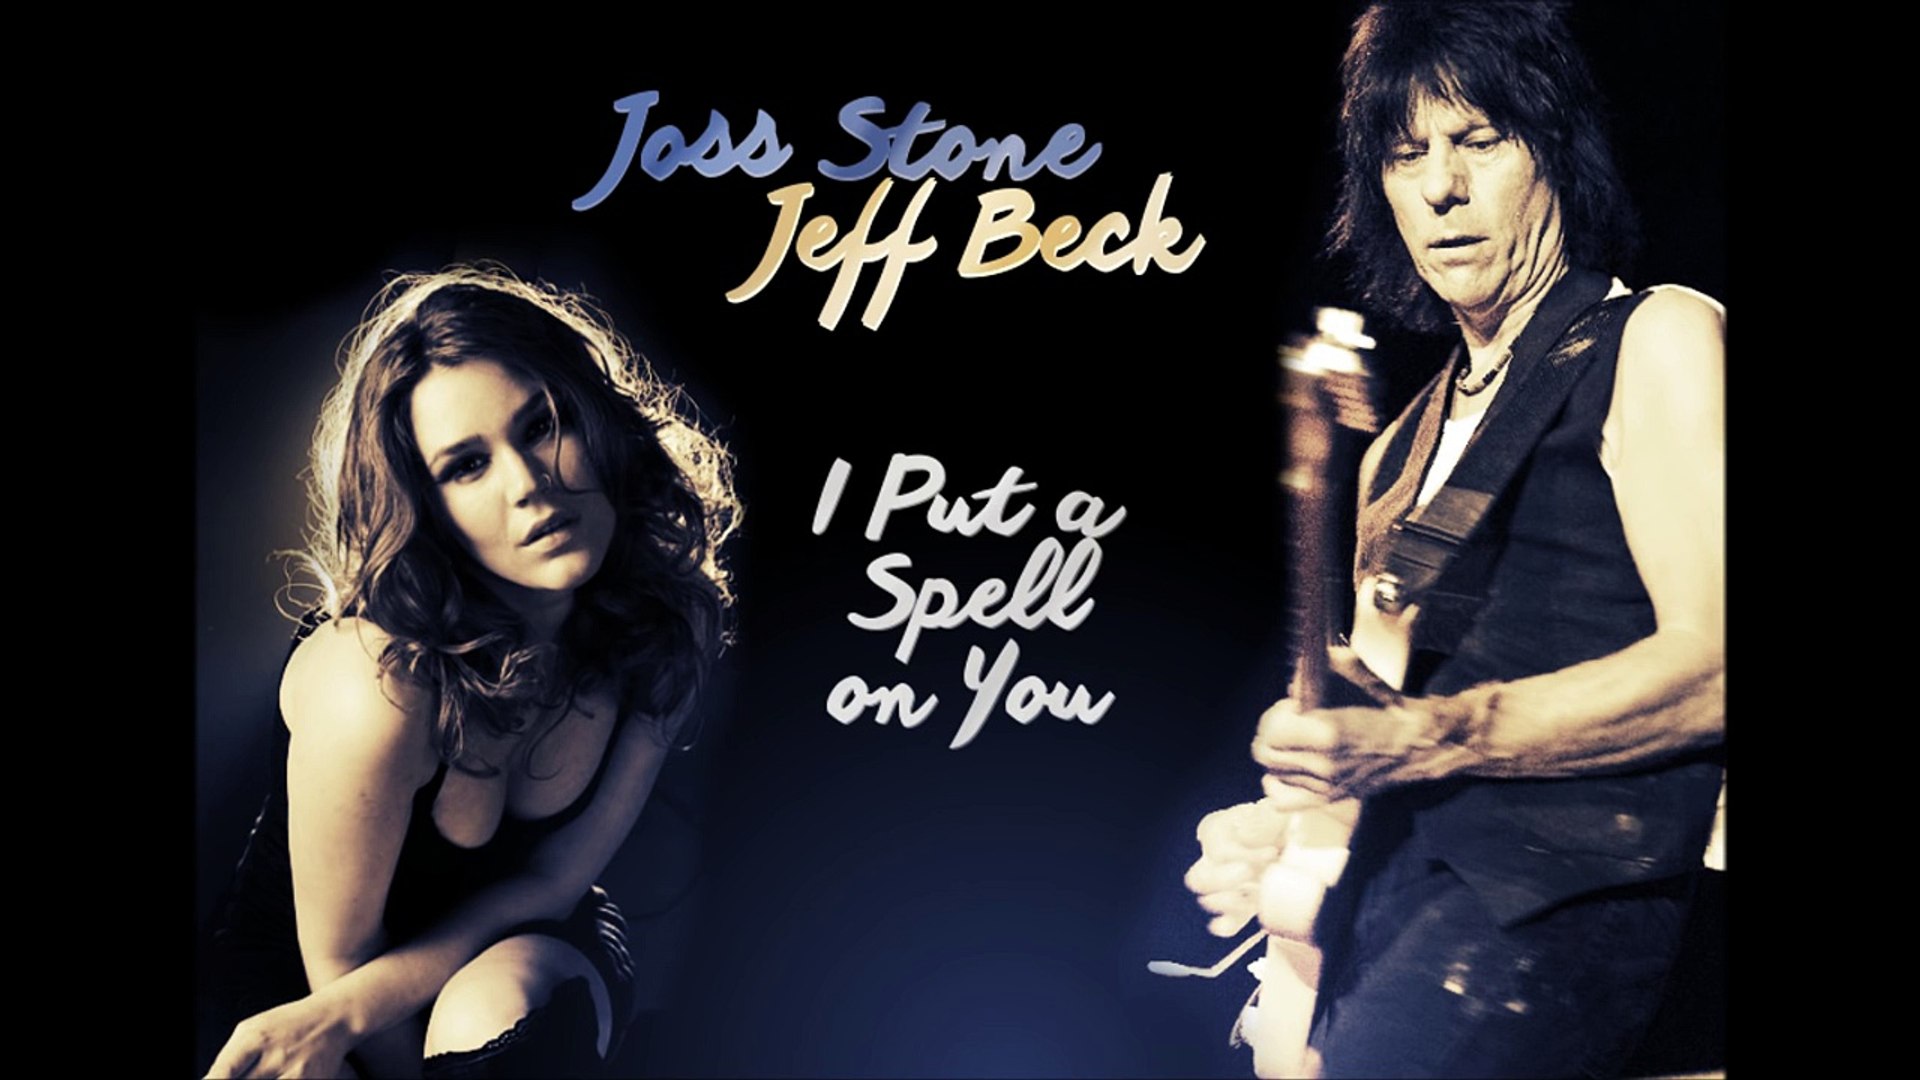 Joss Stone & Jeff Beck - I put a spell on you (lyrics) - video Dailymotion